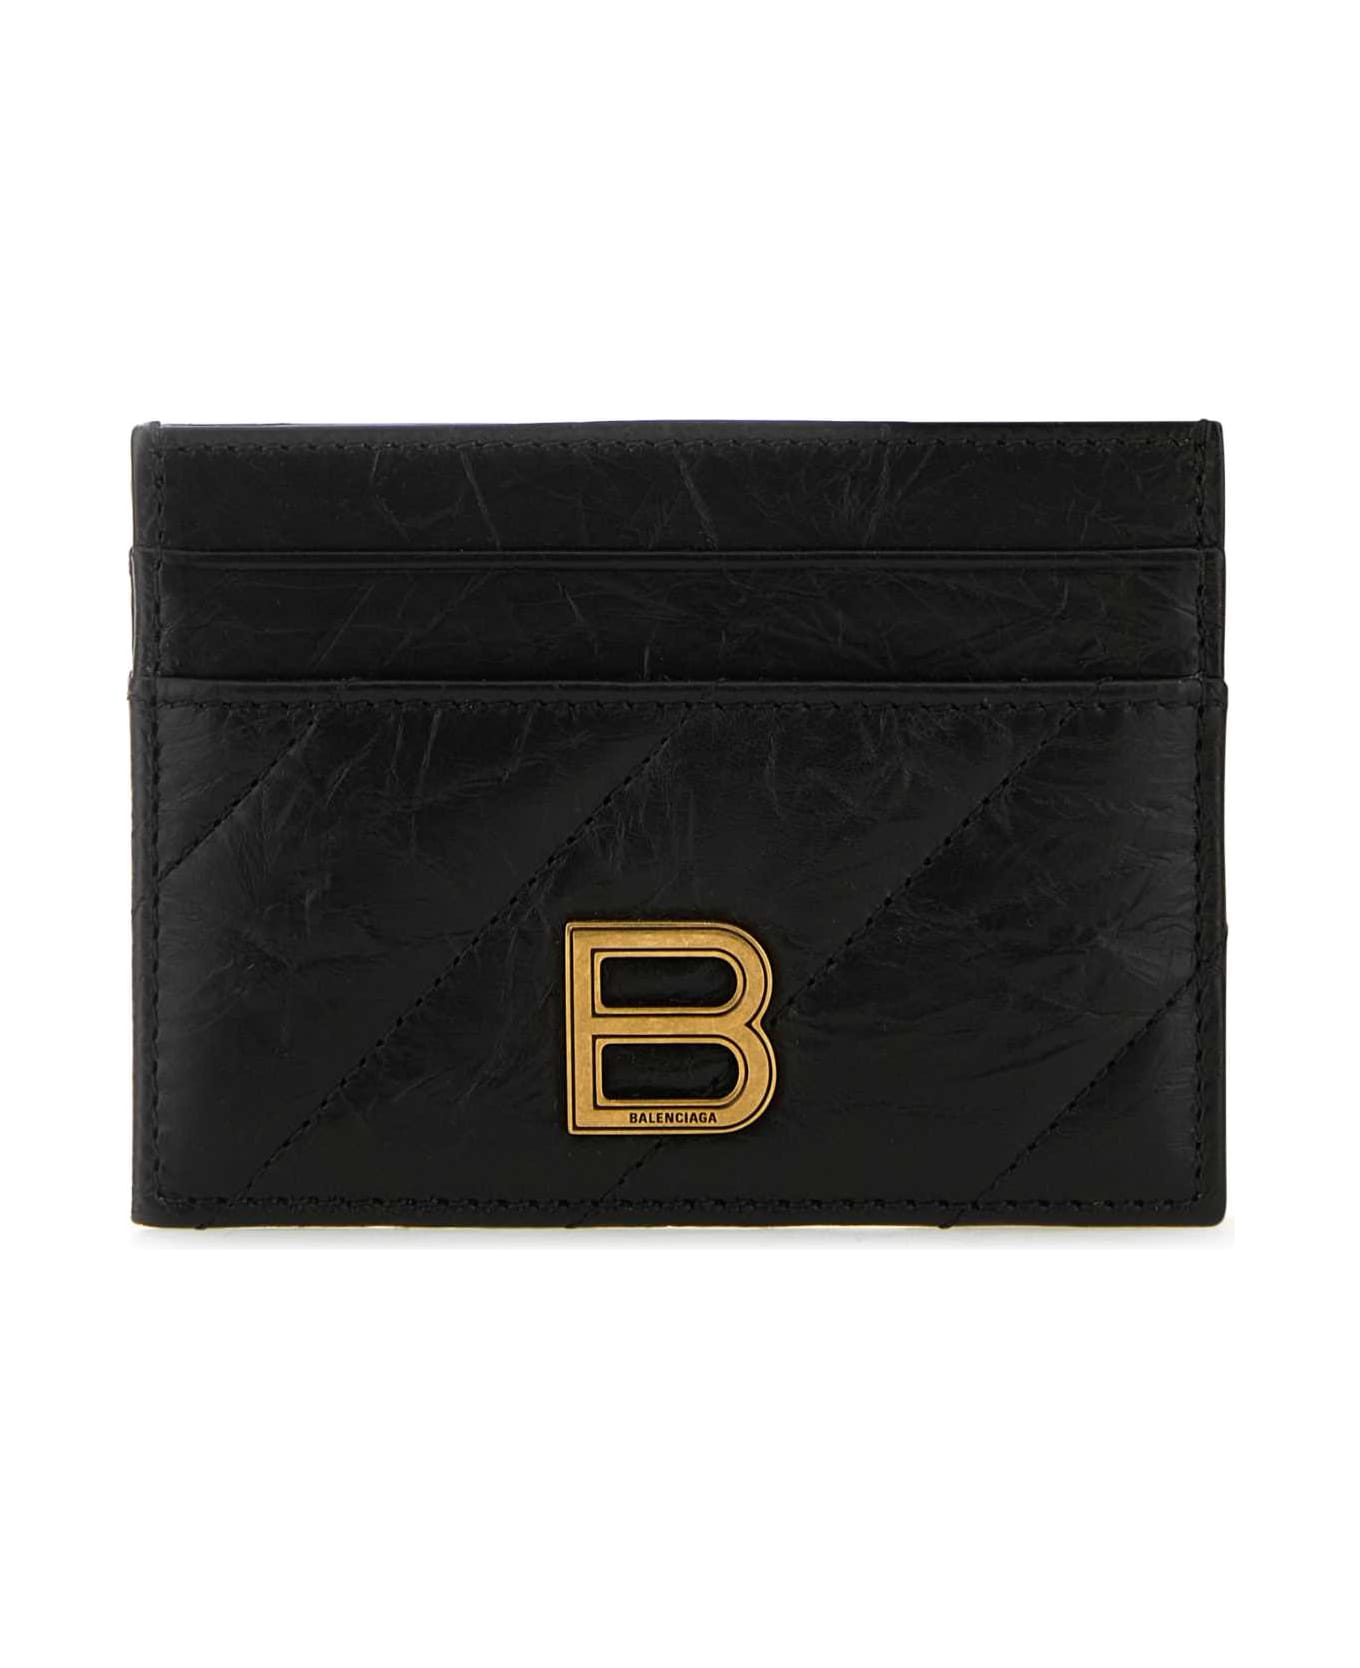 Balenciaga Black Leather Card Holder - Black